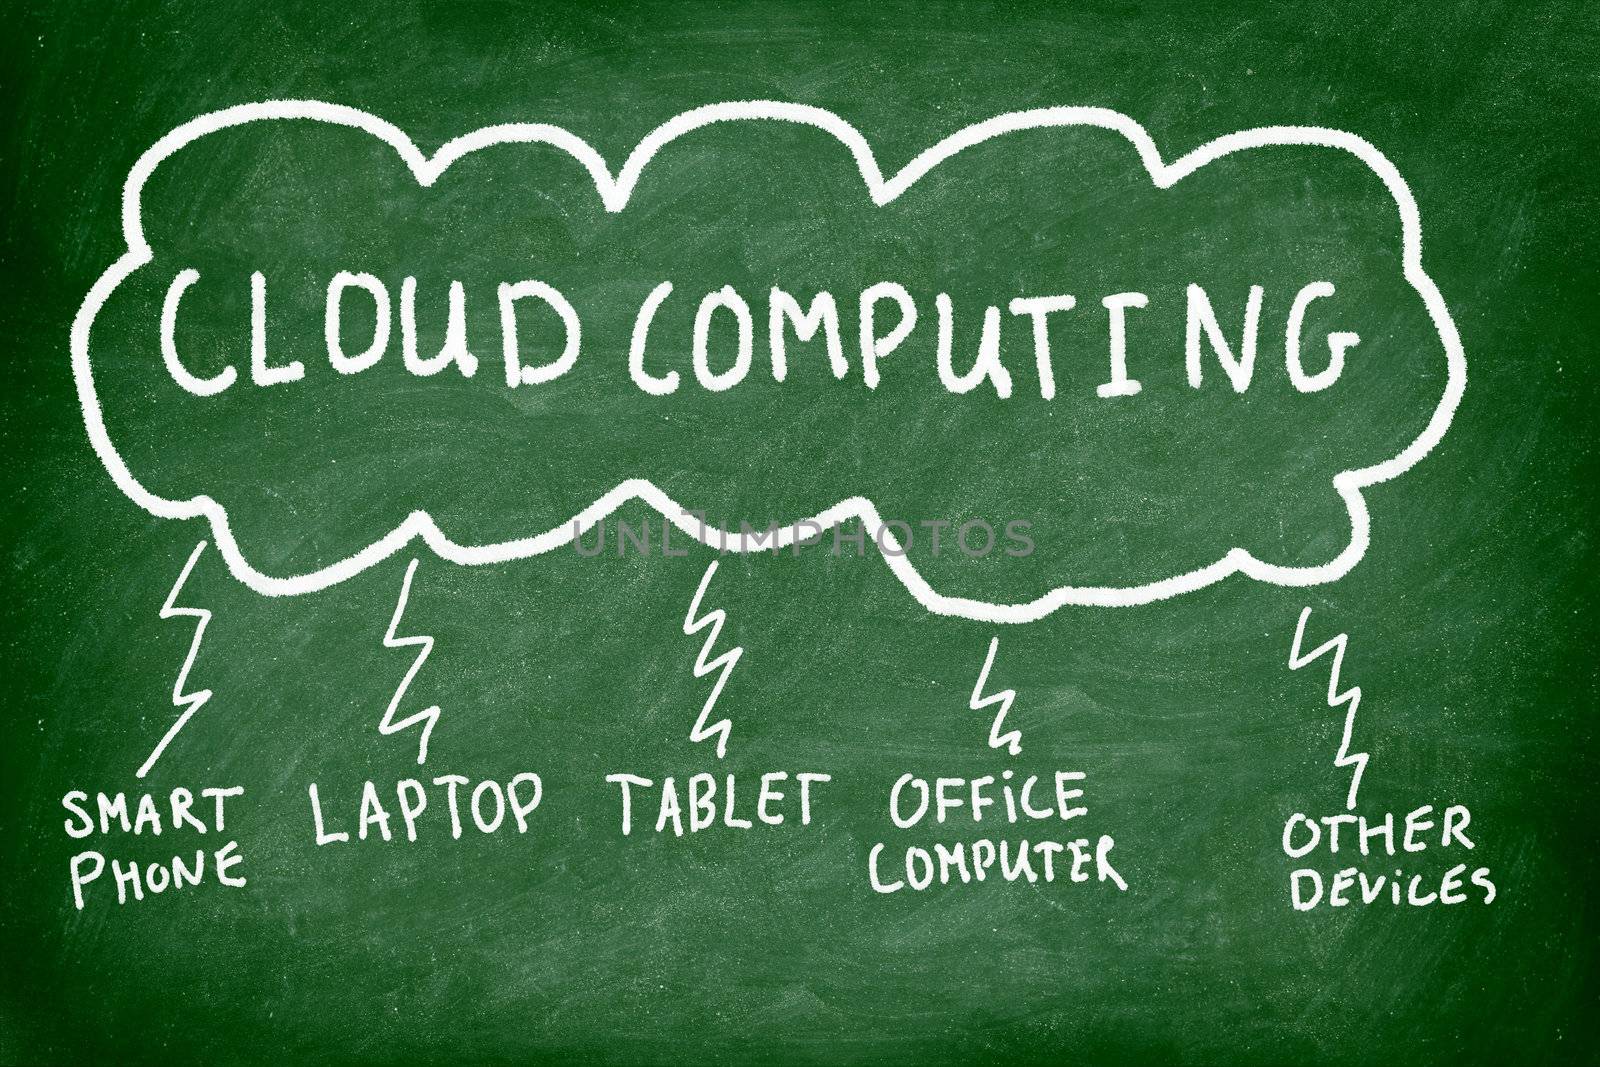 Cloud computing by Maridav